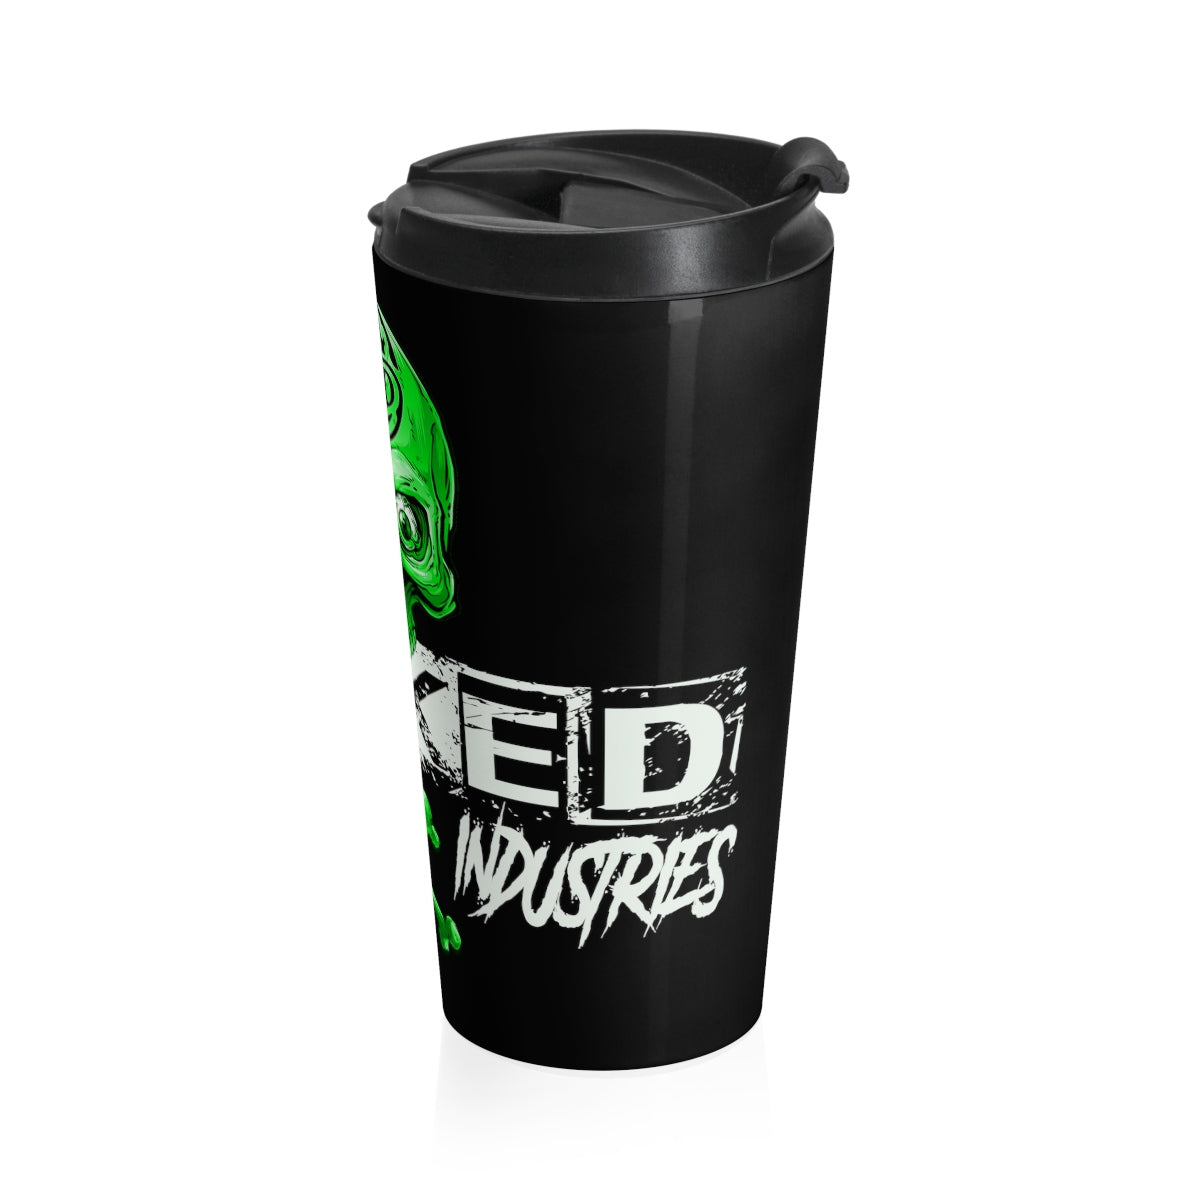 Stay Wild 2/Black/Neon Green/Stainless Steel Travel Mug